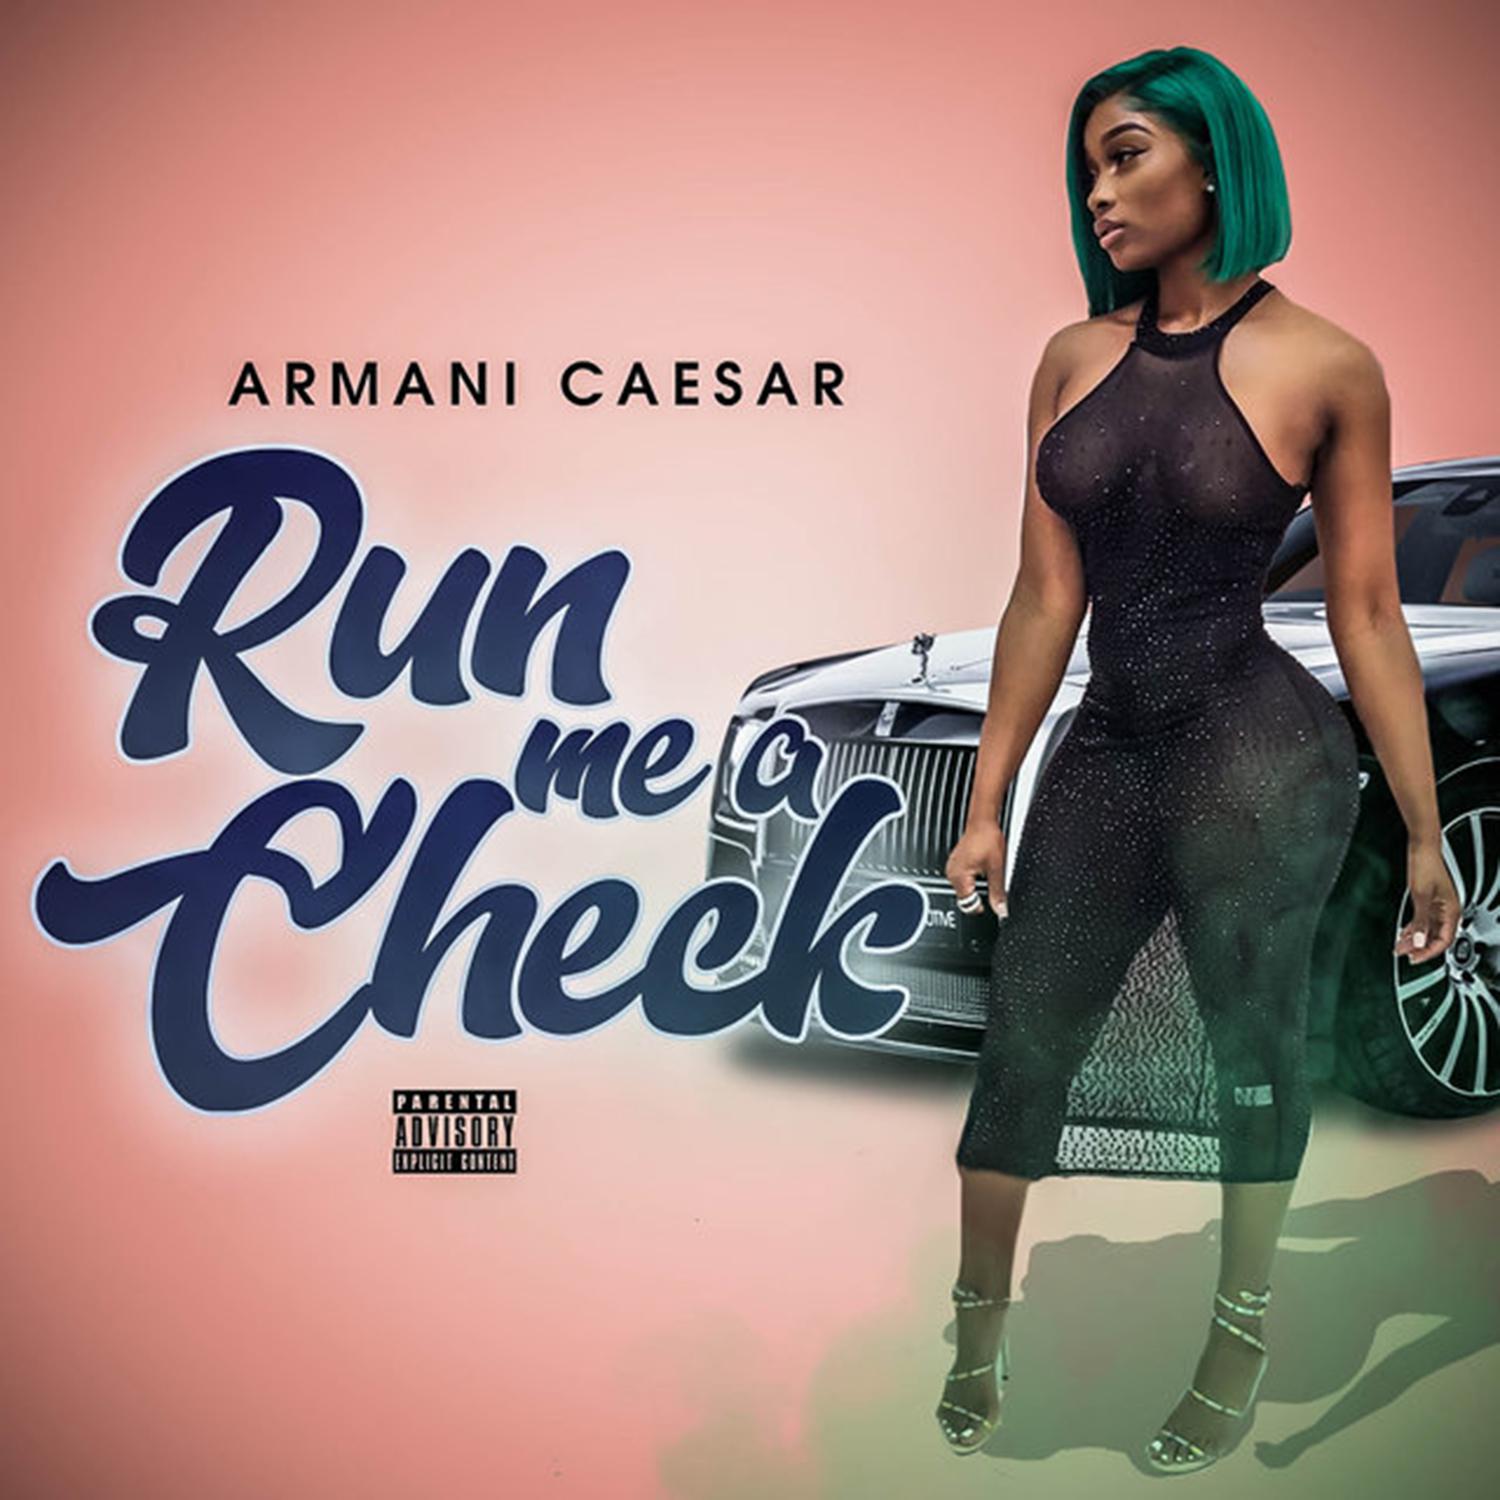 Armani Caesar - Run Me a Check